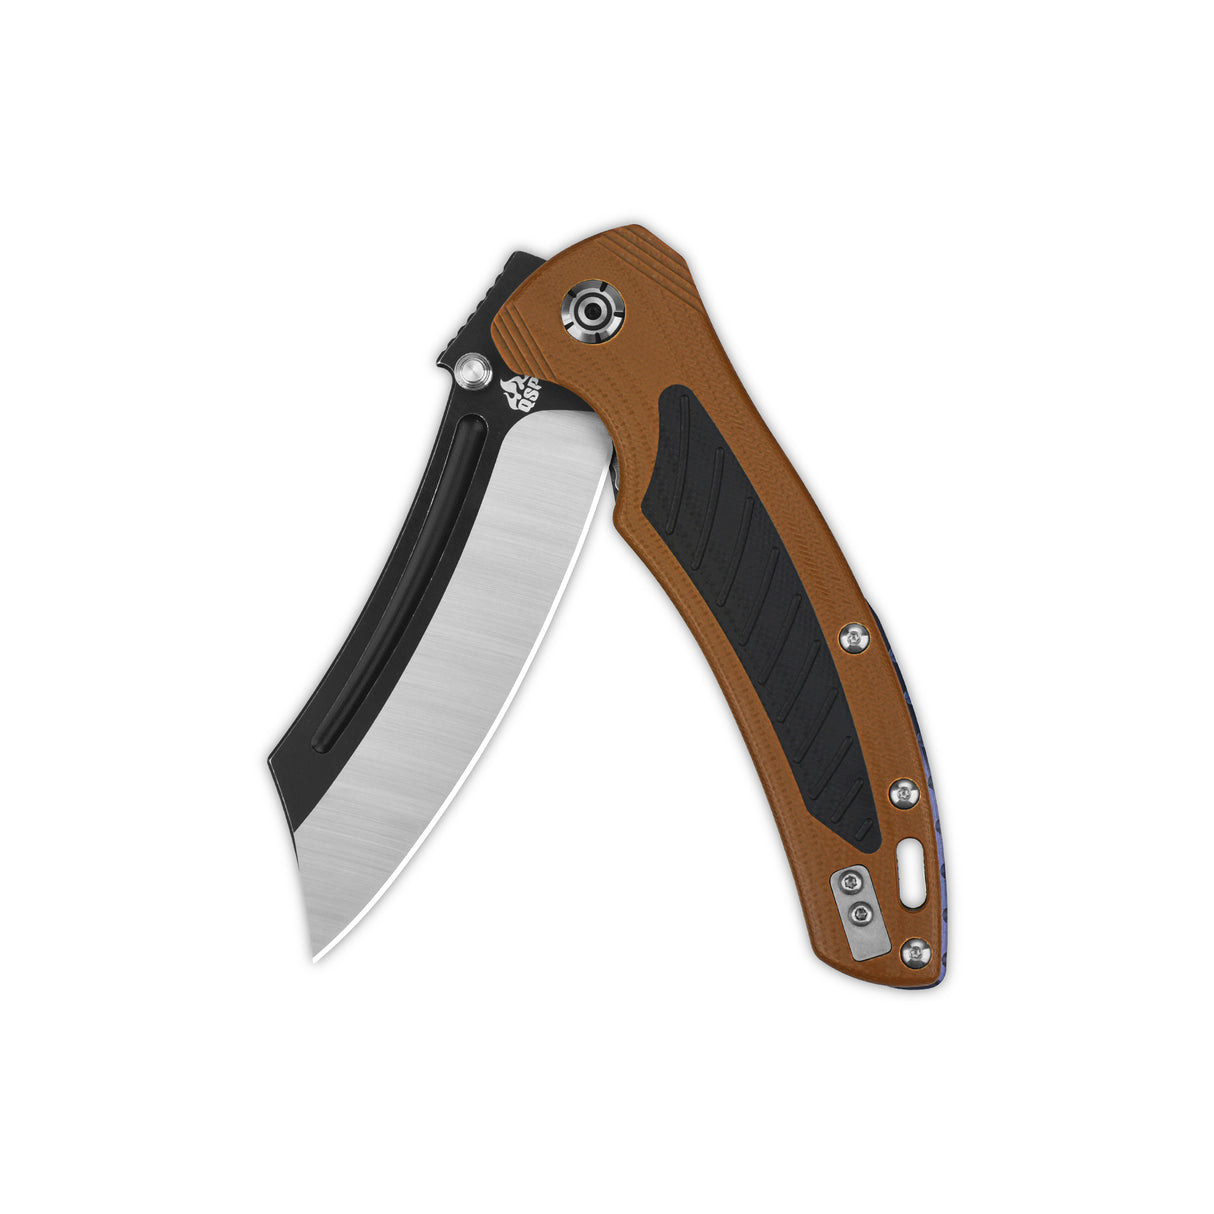 QSP Platypus Liner Lock Pocket Knife Sandvik 14C28N Blade G10 Handle with Ti Backspacer